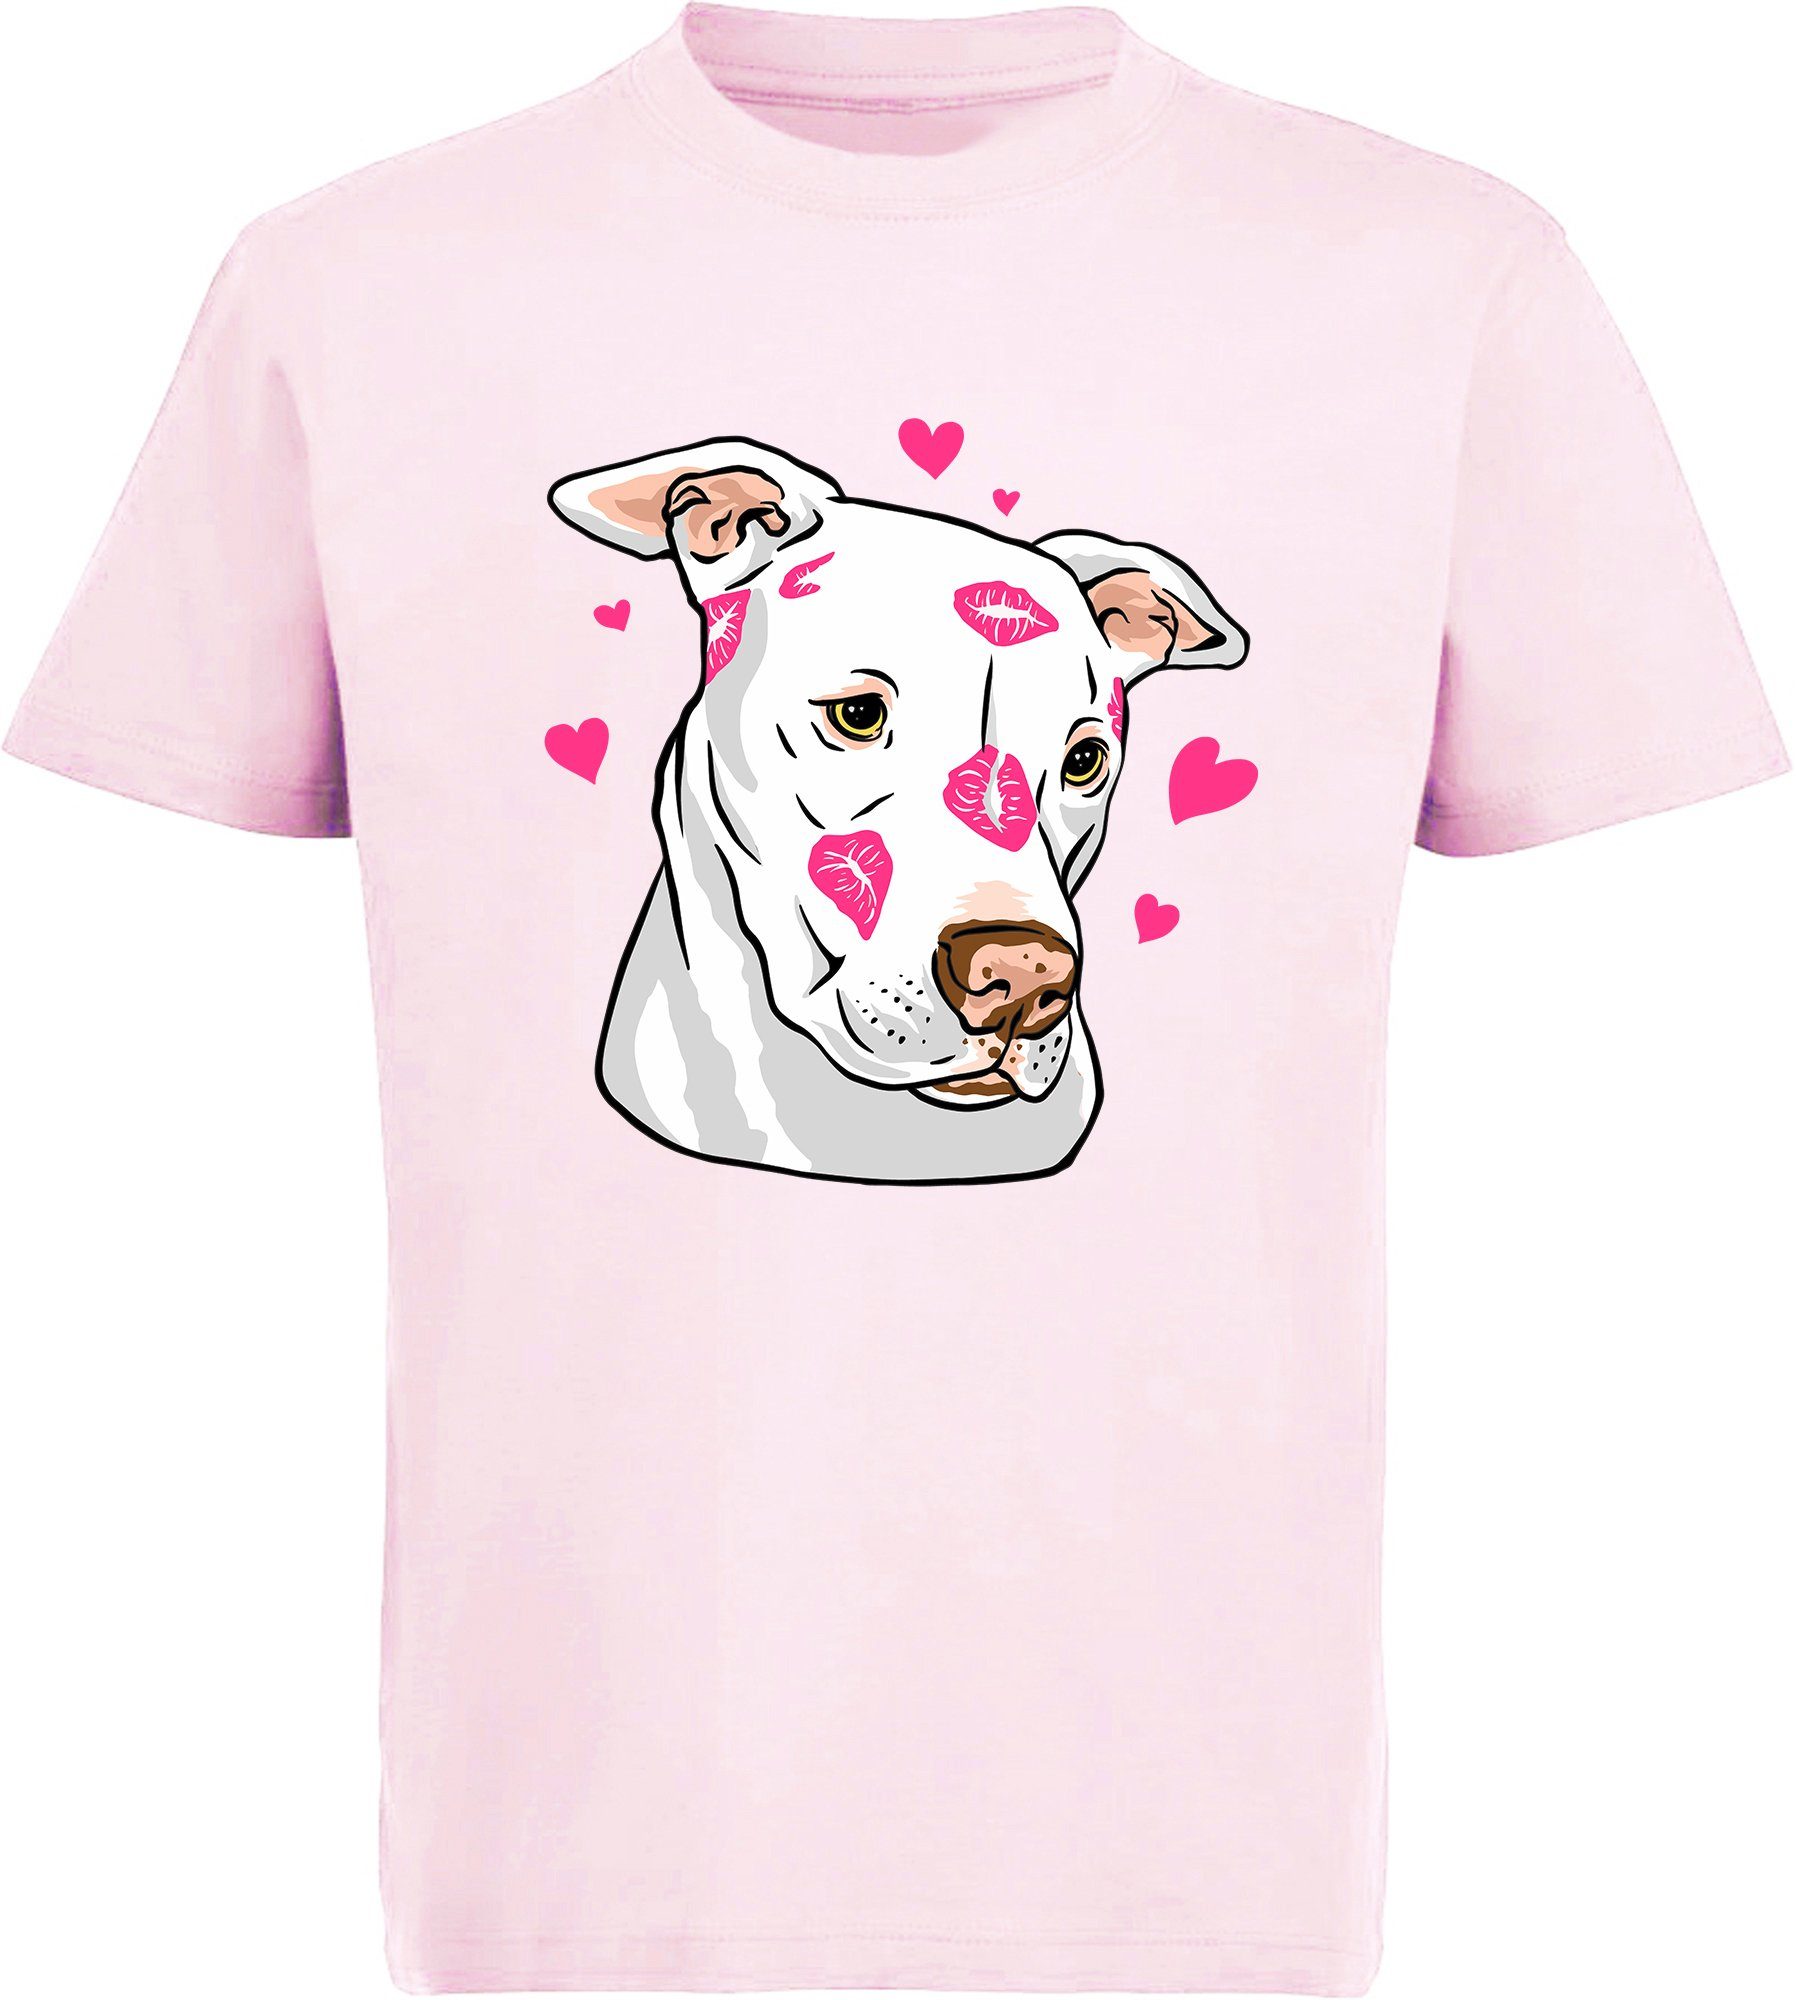 MyDesign24 Print-Shirt bedrucktes Kinder Hunde rosa Pitbull mit Herzen Baumwollshirt T-Shirt mit Aufdruck, i229 